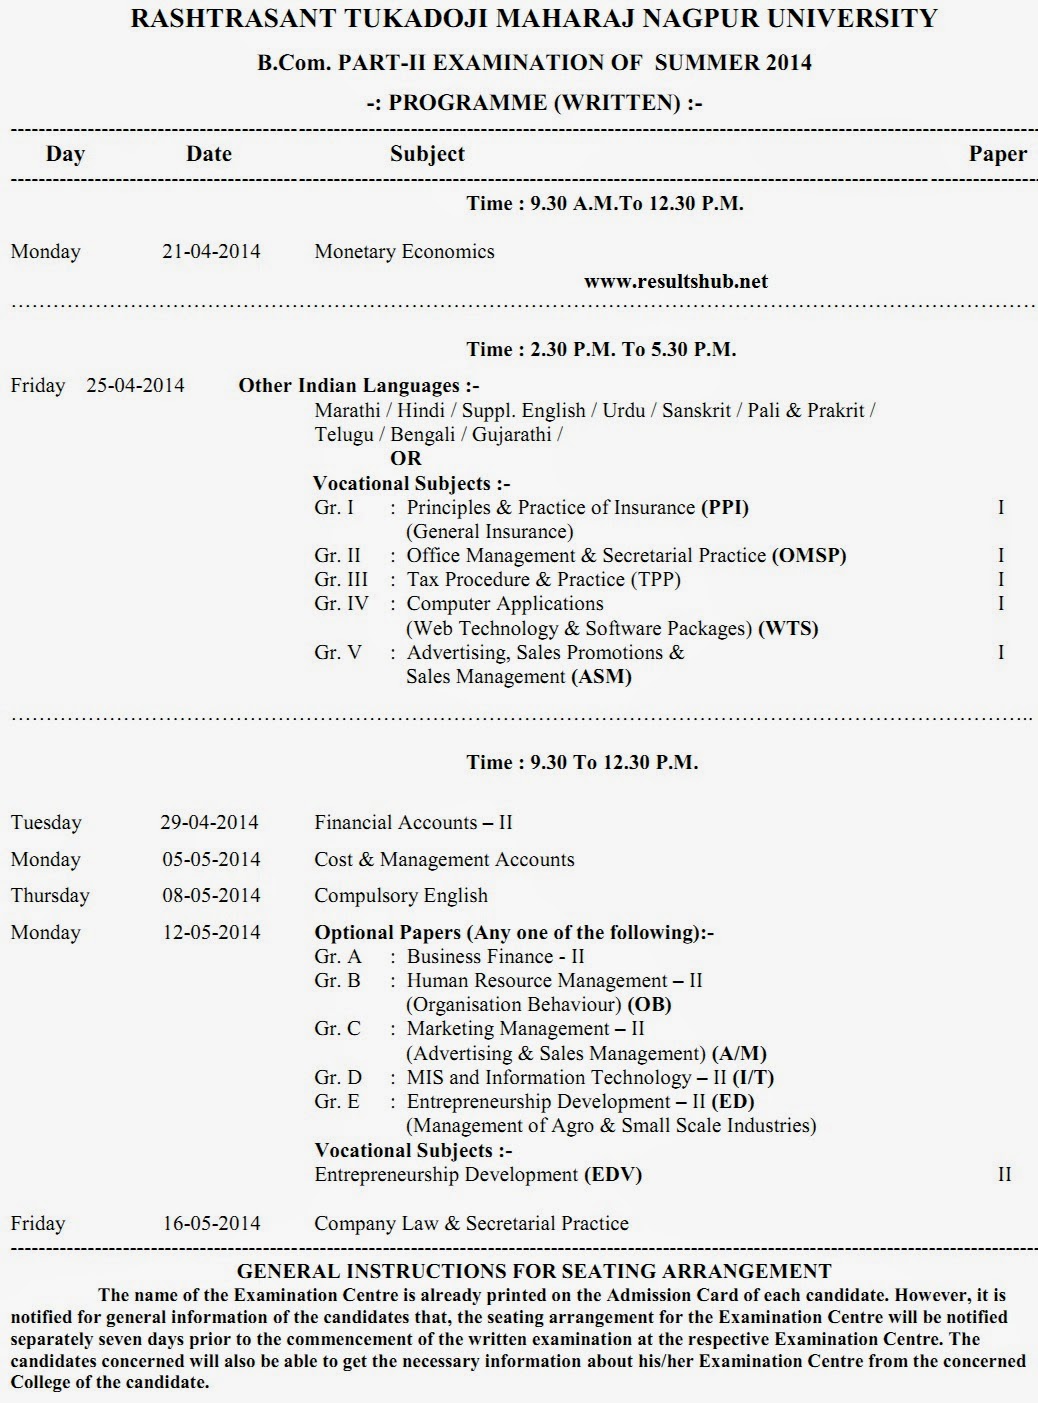 B.Com. Summer 2014 Timetable RTMNU